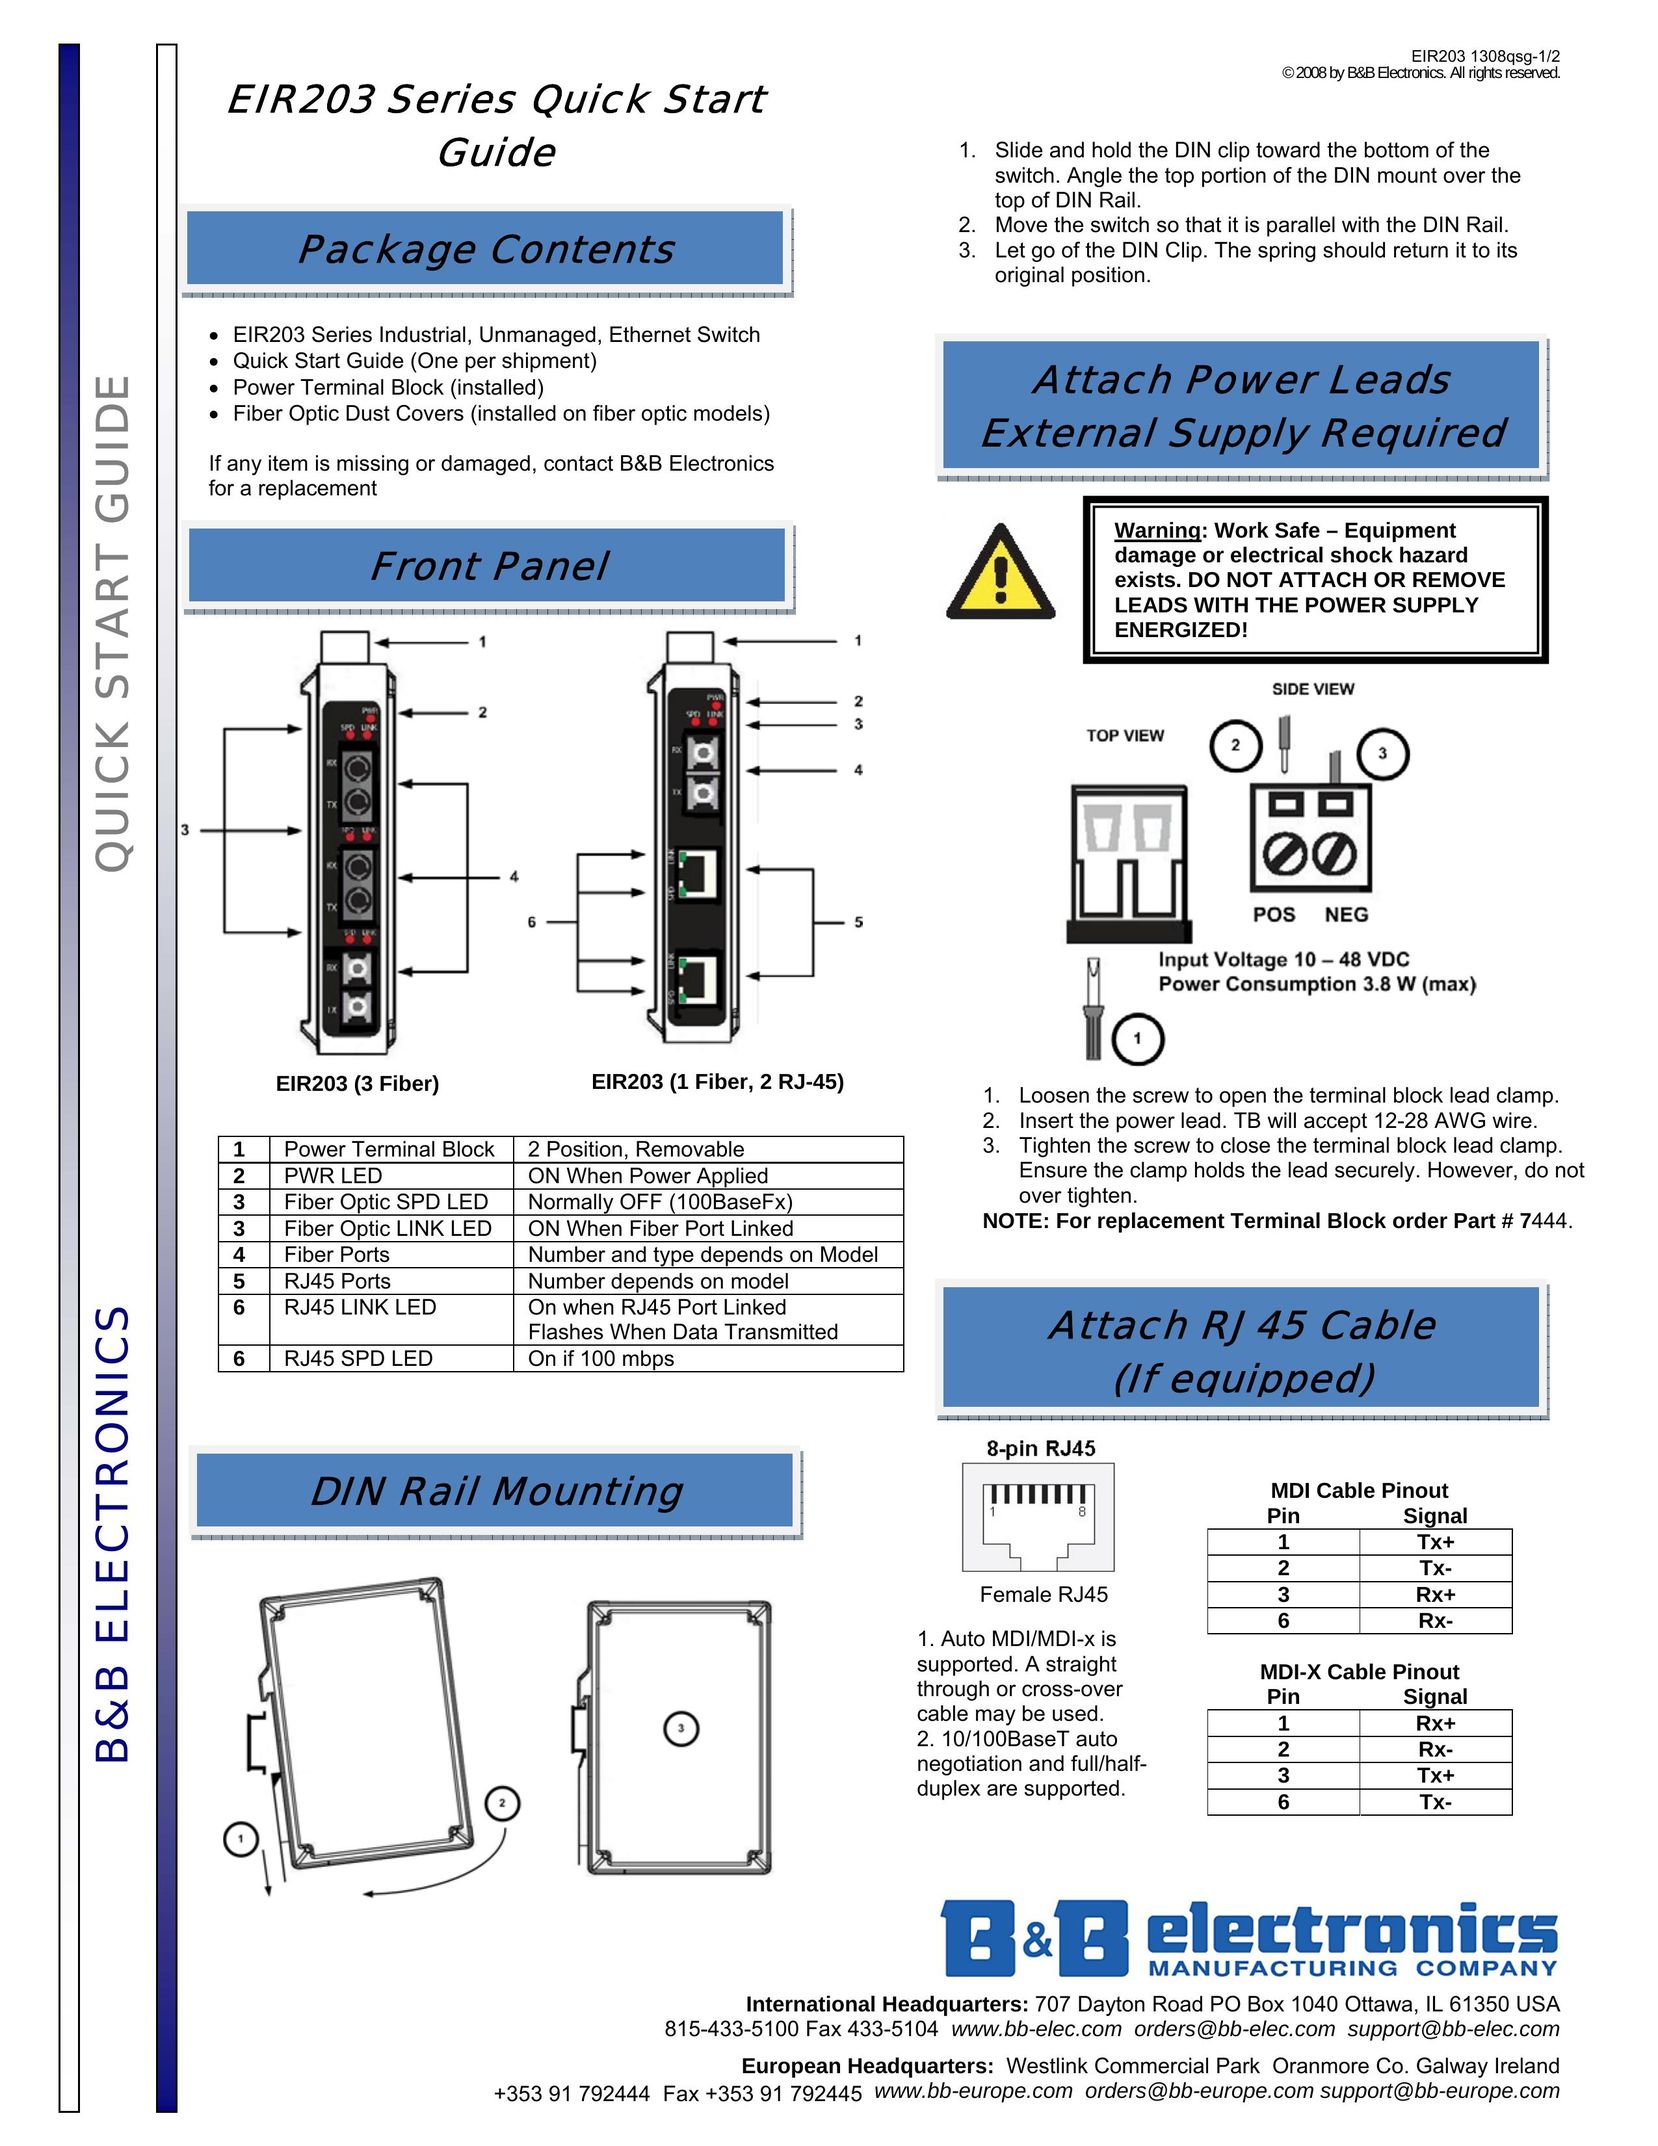 B&B Electronics EIR203-MC Network Card User Manual